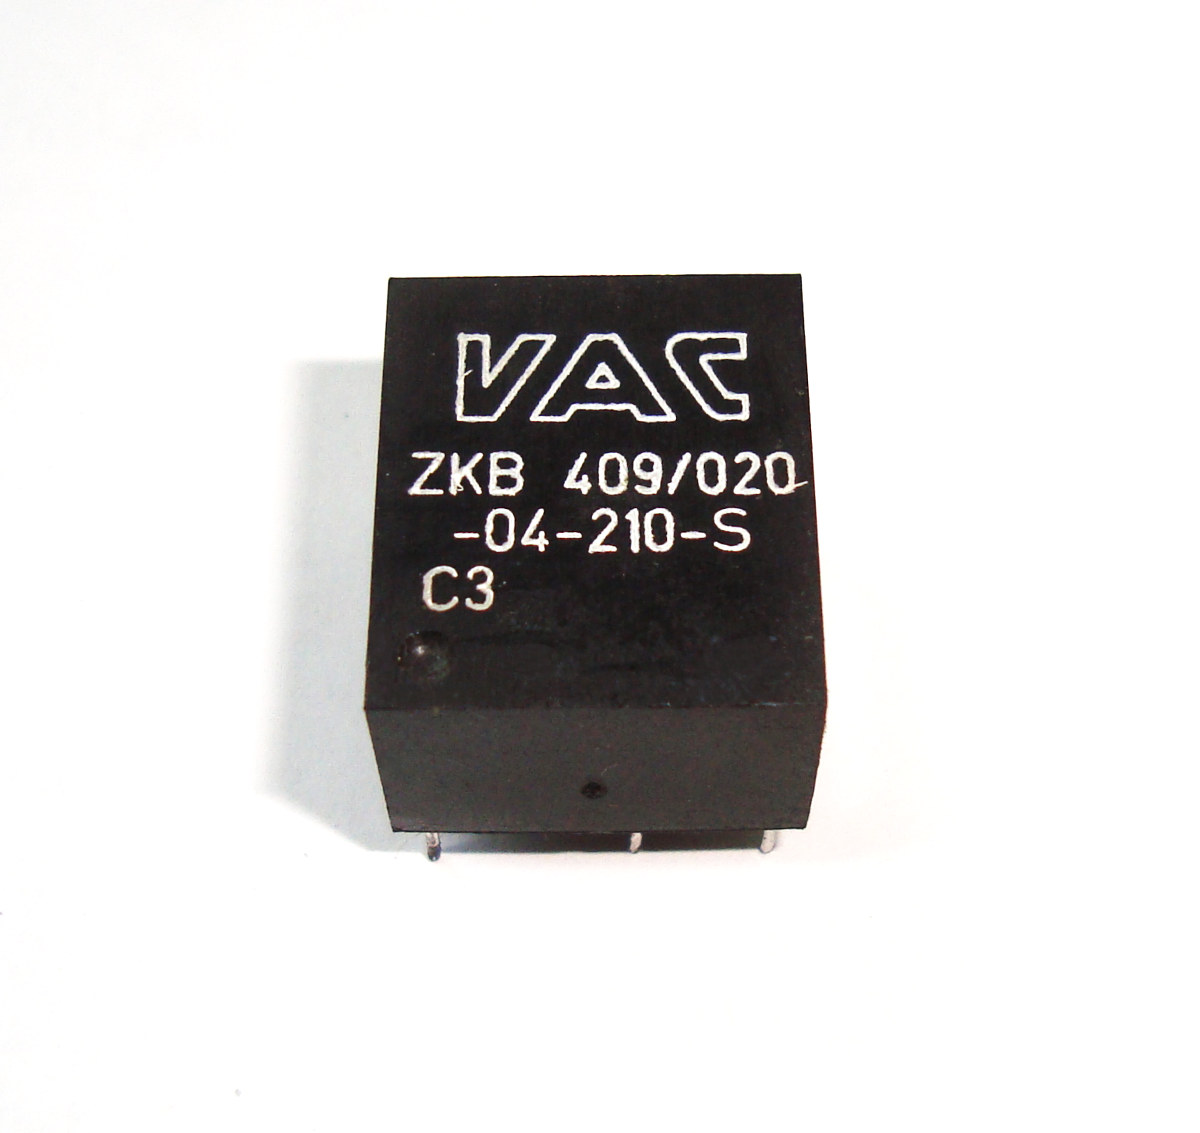 Vac ZKB409/020-04-210-S-C3 Transformator